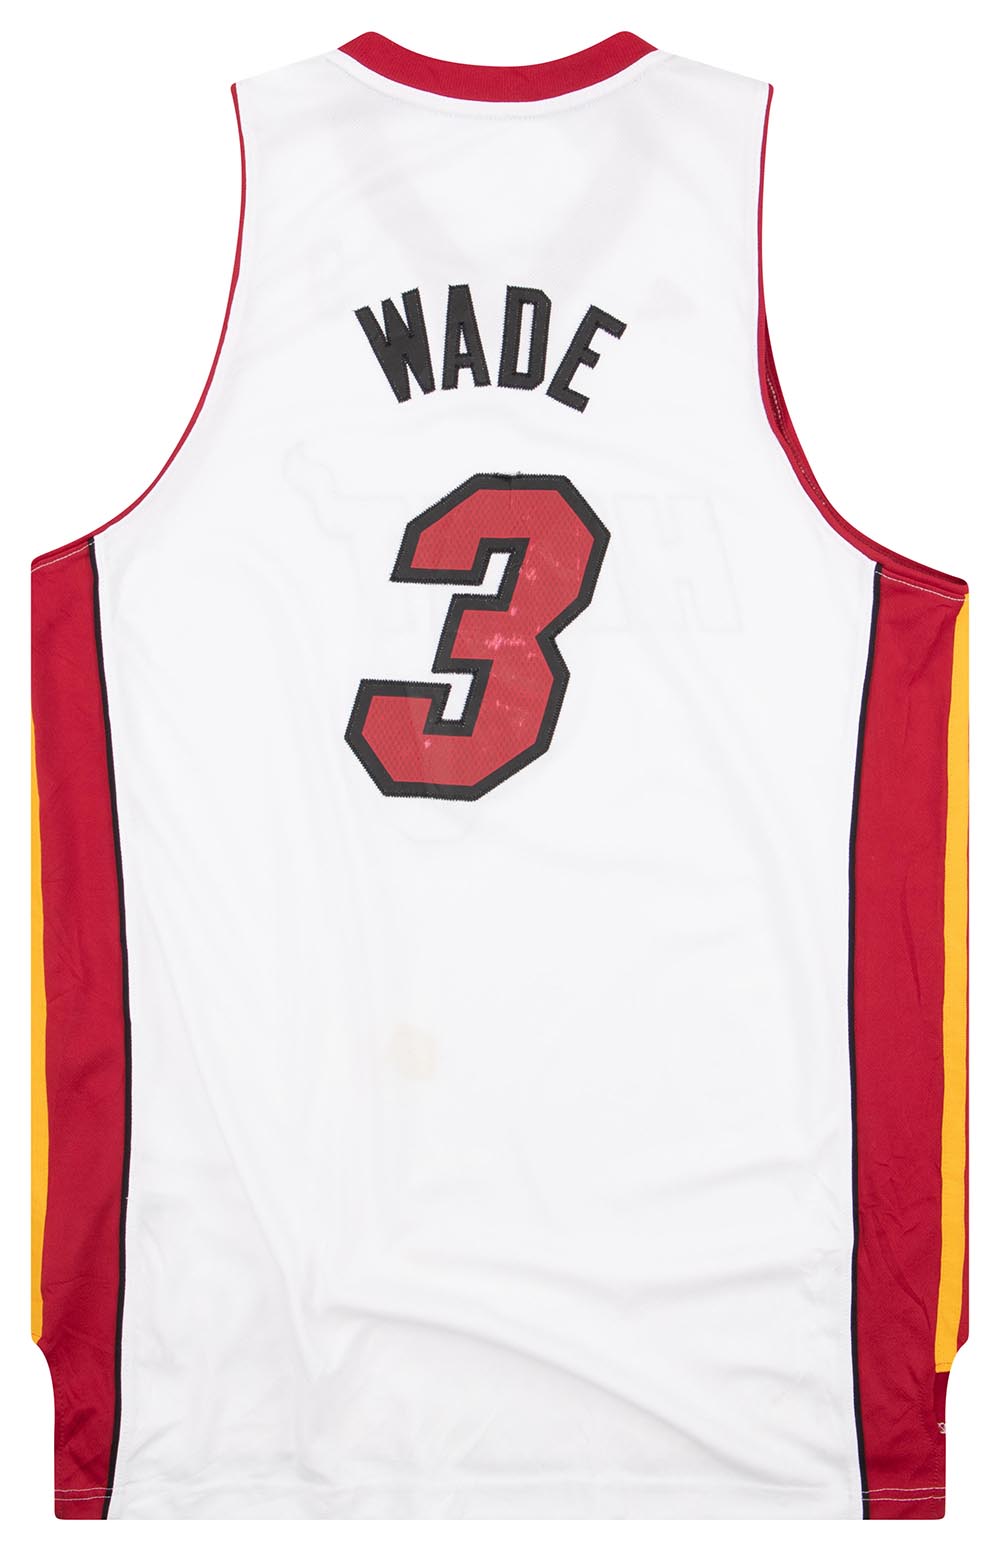 Dwayne Wade Miami Heat #3 Adidas Jersey Youth Large 14-16 NBA Authentics